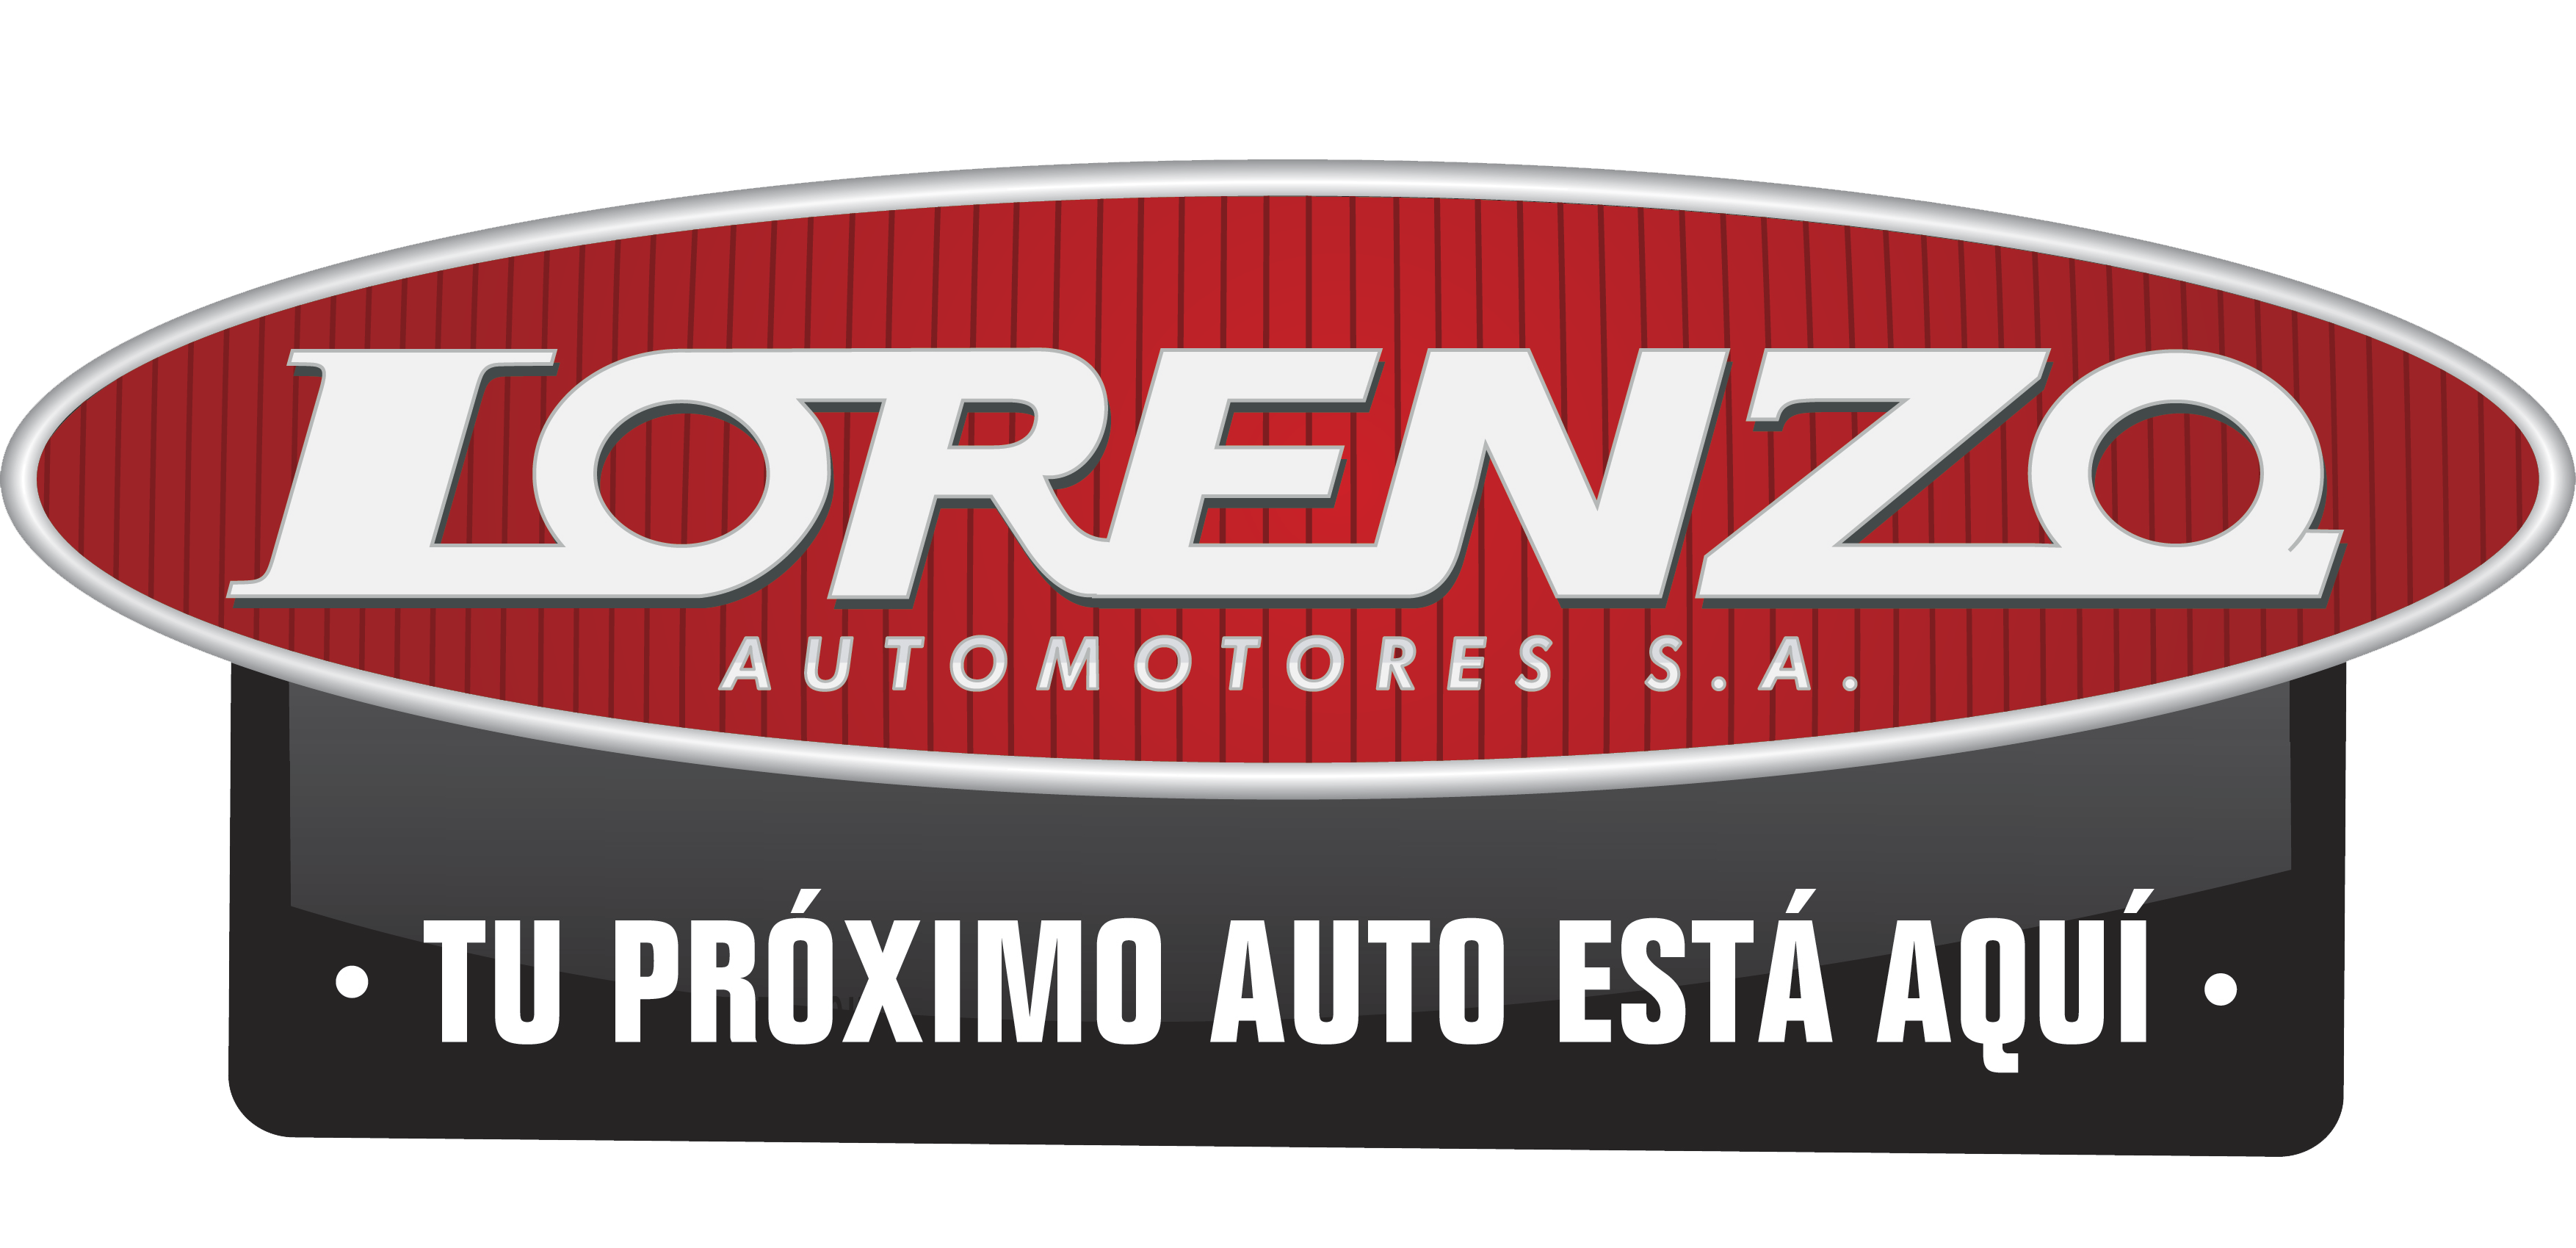 Logo of Lorenzo Automotores